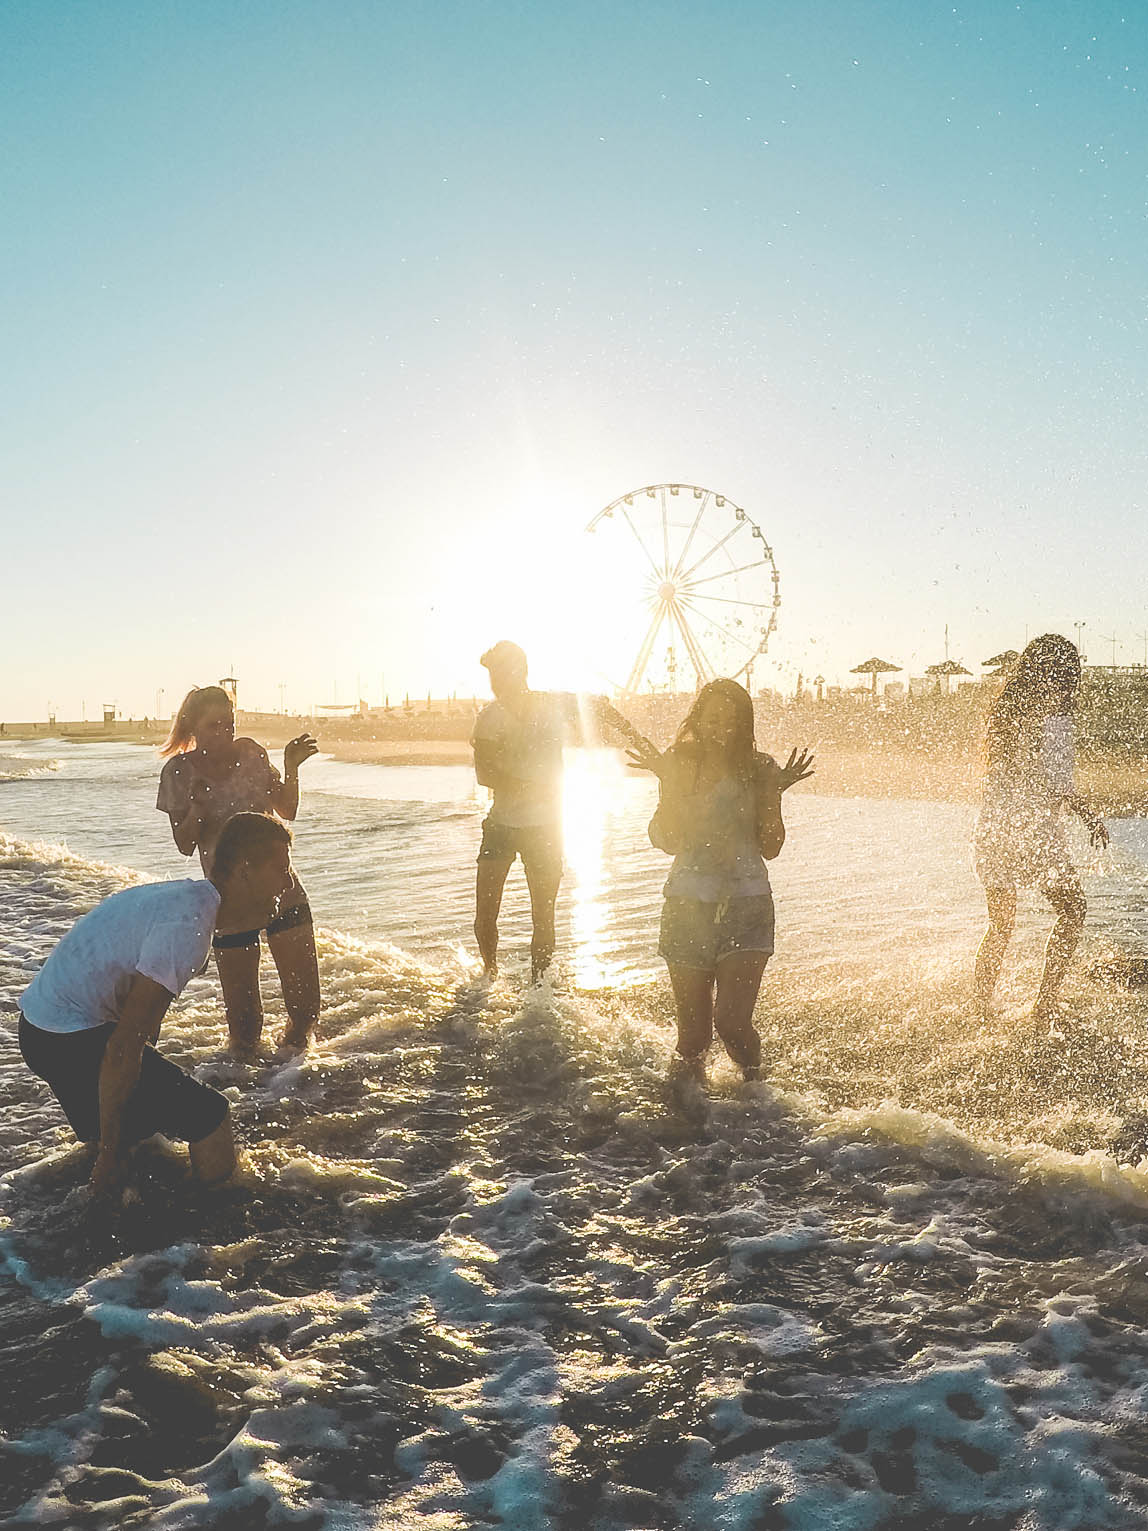 Teenagers splashing in the ocean while walking along the beach having fun